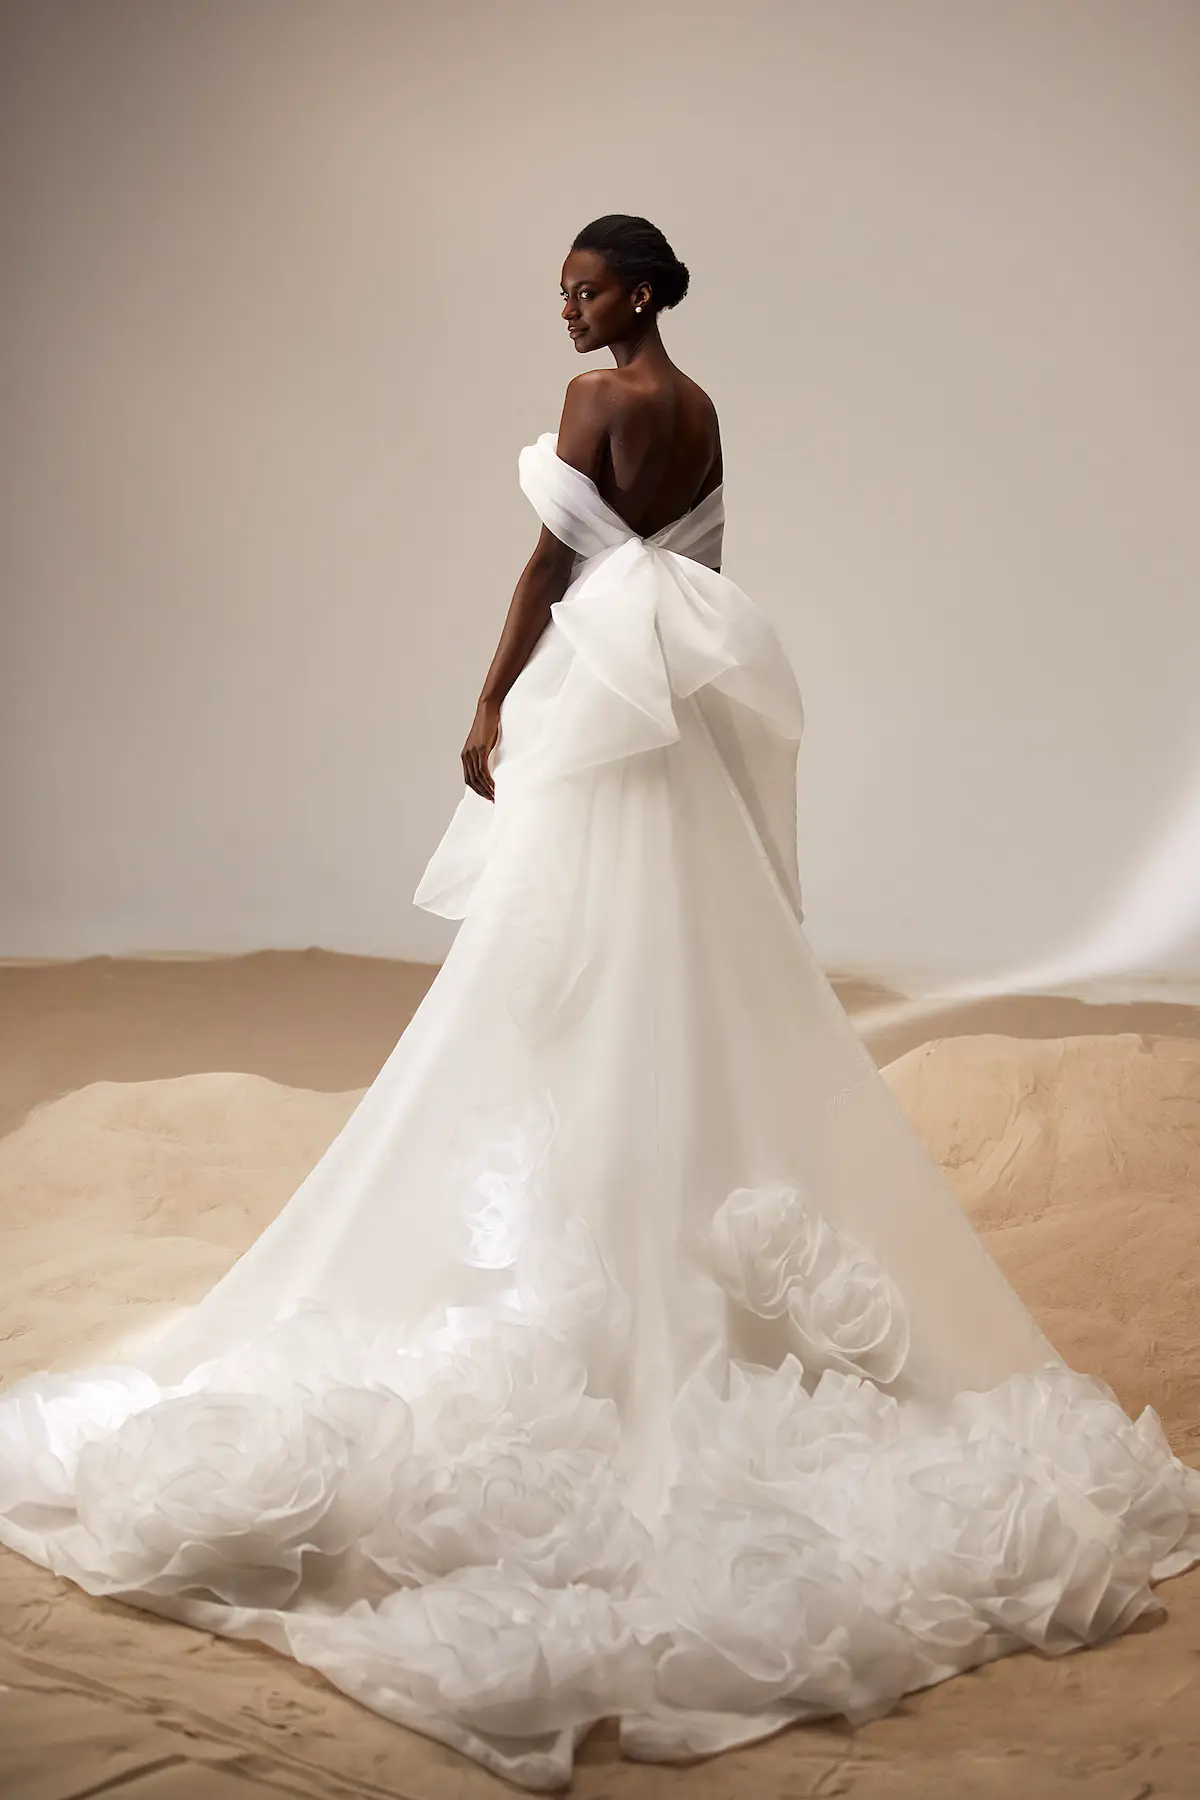 Glamorous Wedding Dresses by Milla Nova - Joelle white lace